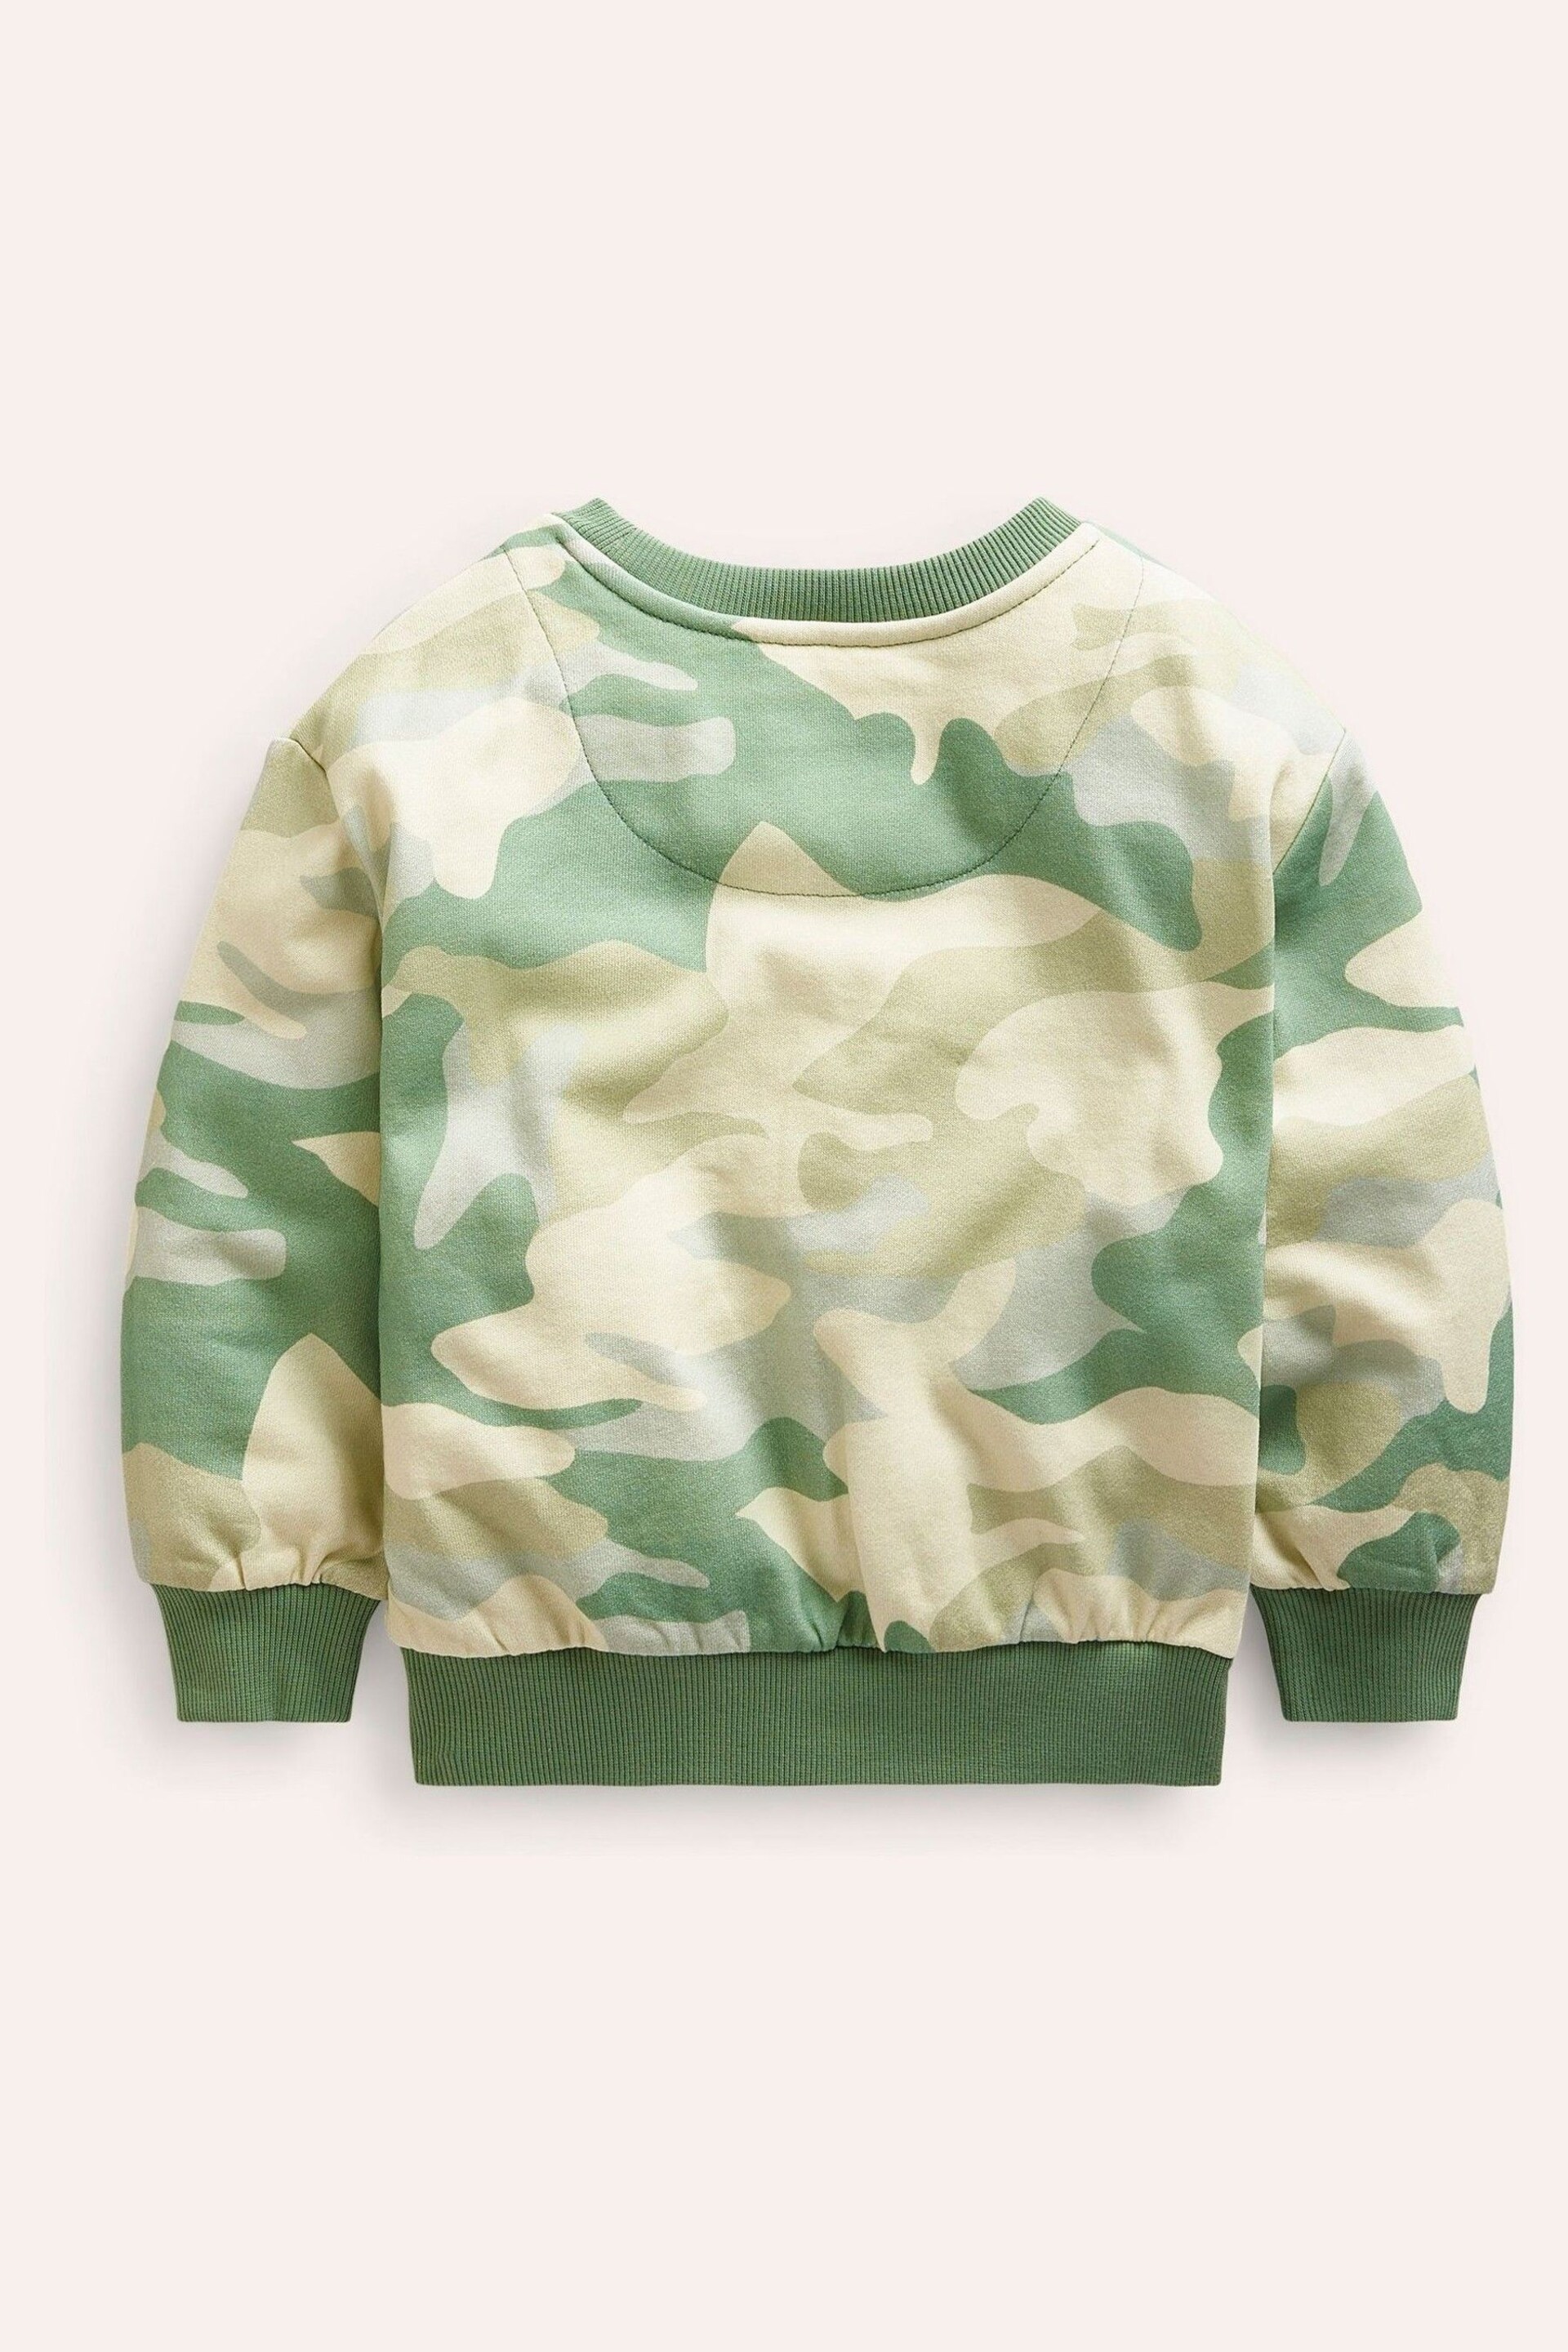 Boden Green Camo Tiger Sweatshirt - Image 2 of 3